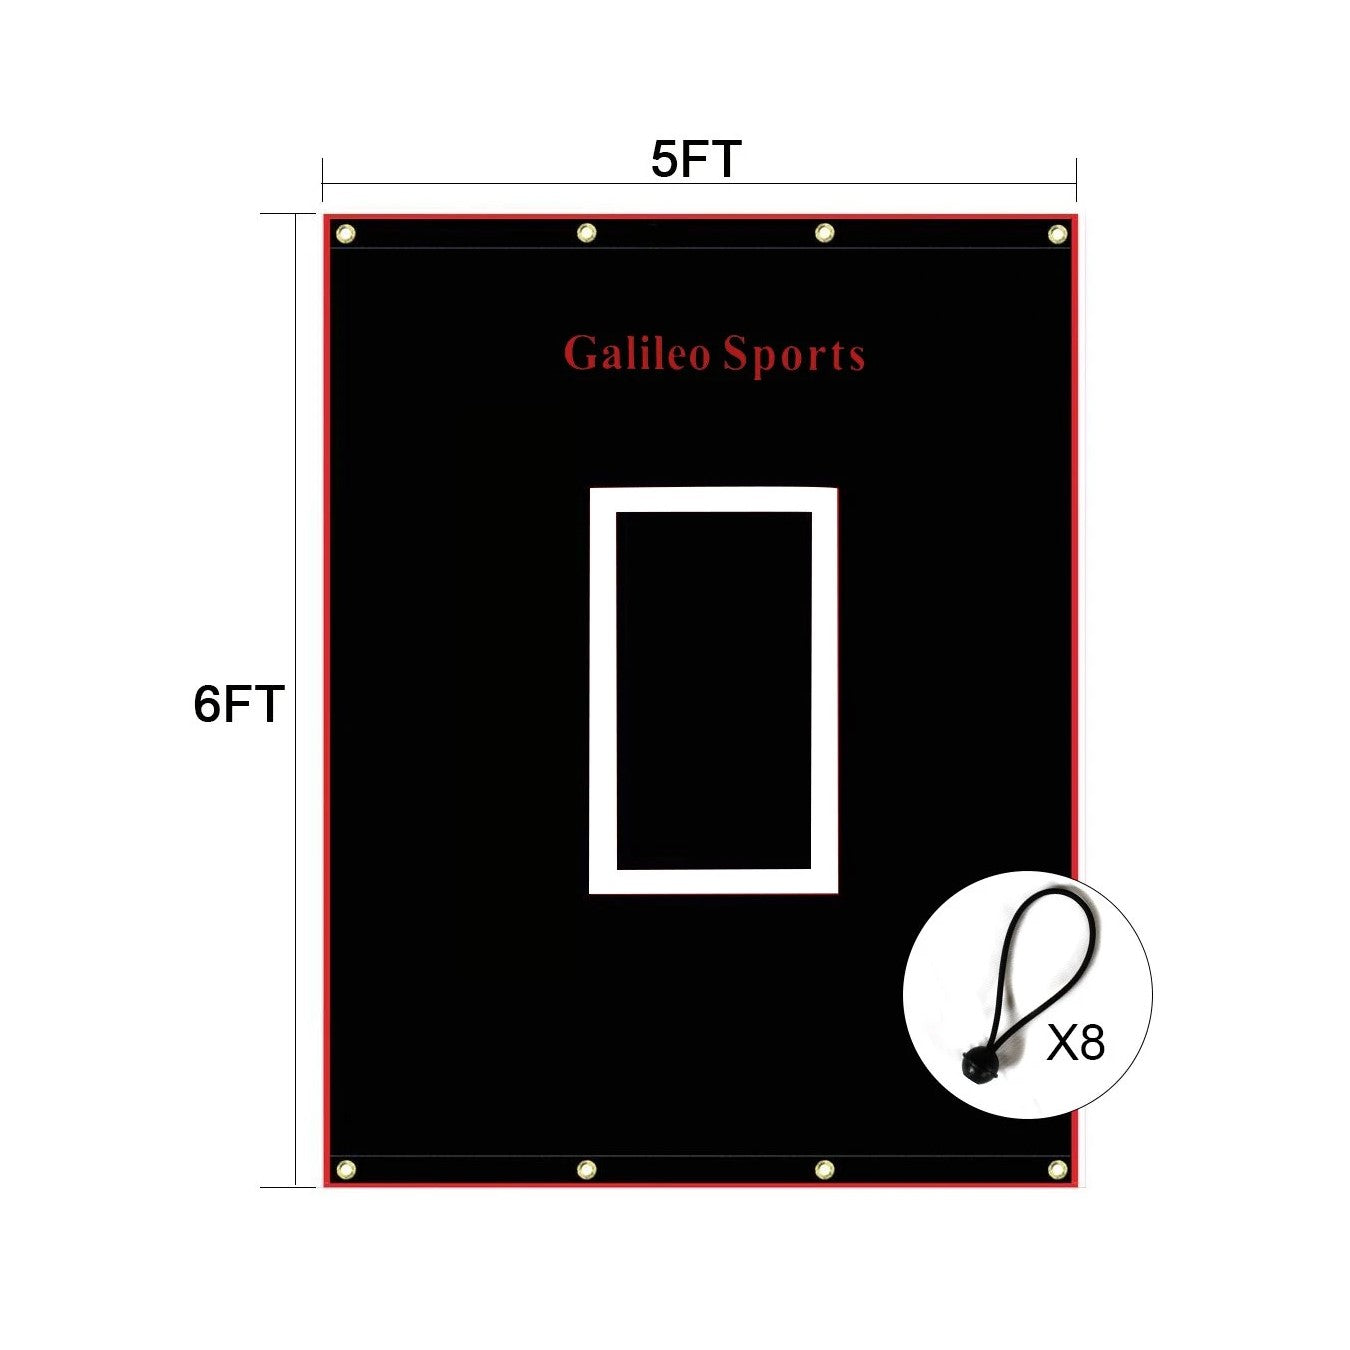 5X6 Galileo Softball Backstop / Viny Backstop Pitching Target